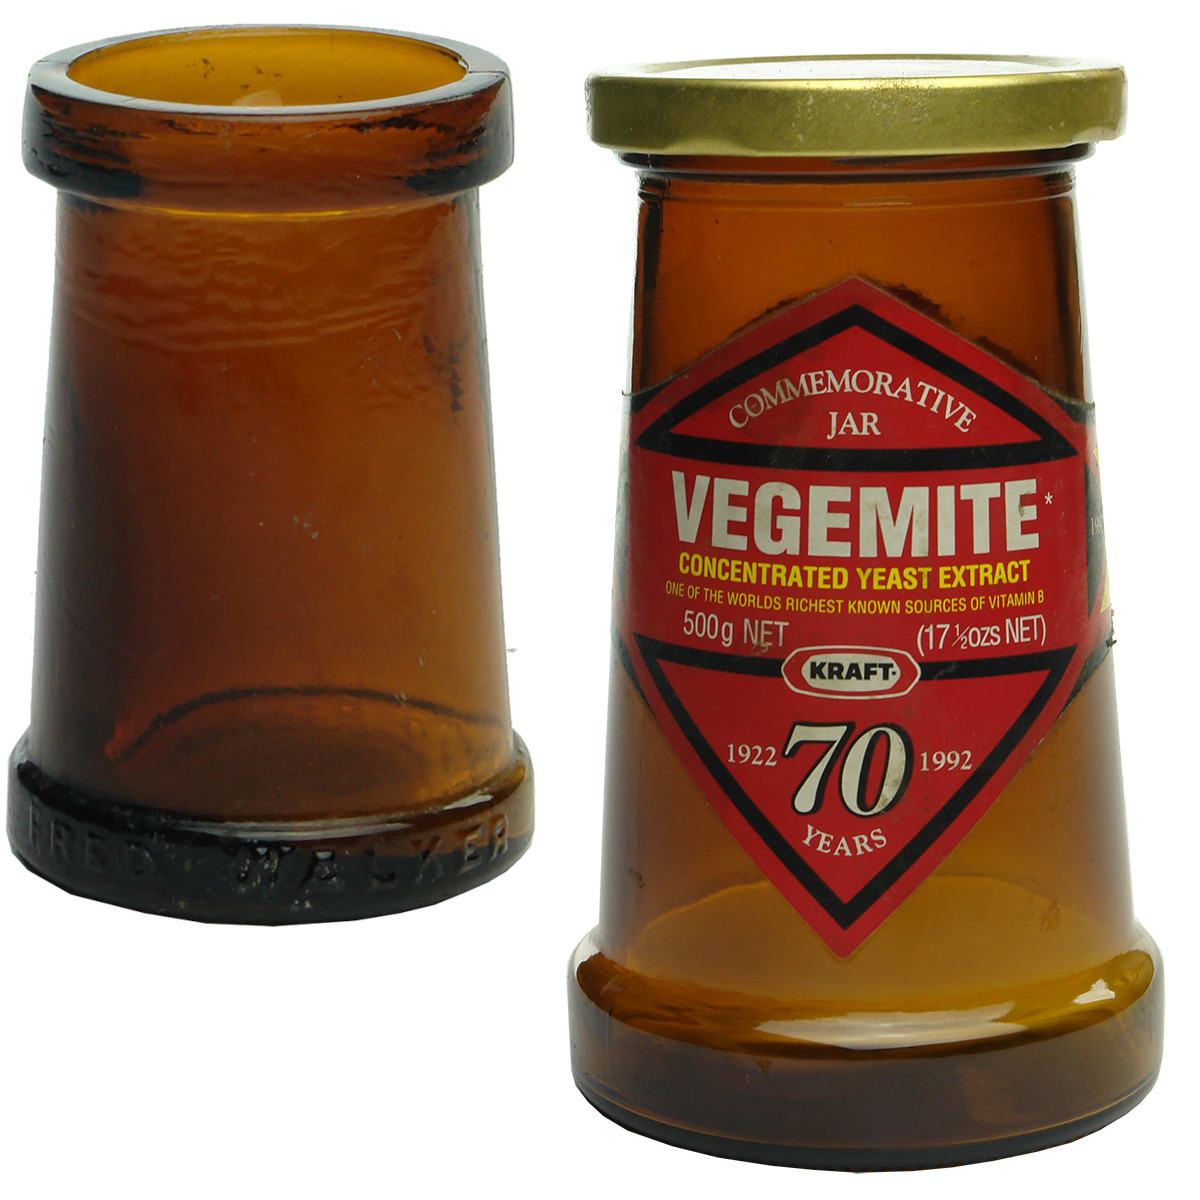 Pair of Vegemite Jars: Small 1920s Fred Walker jar and Large 1992 70th Anniversary jar.